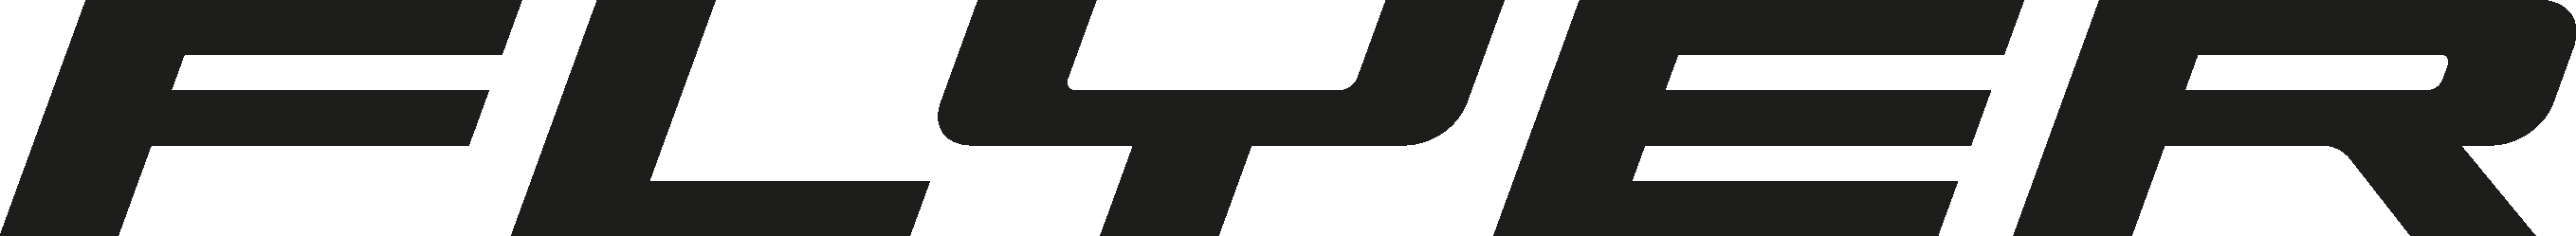 Flyer logo black